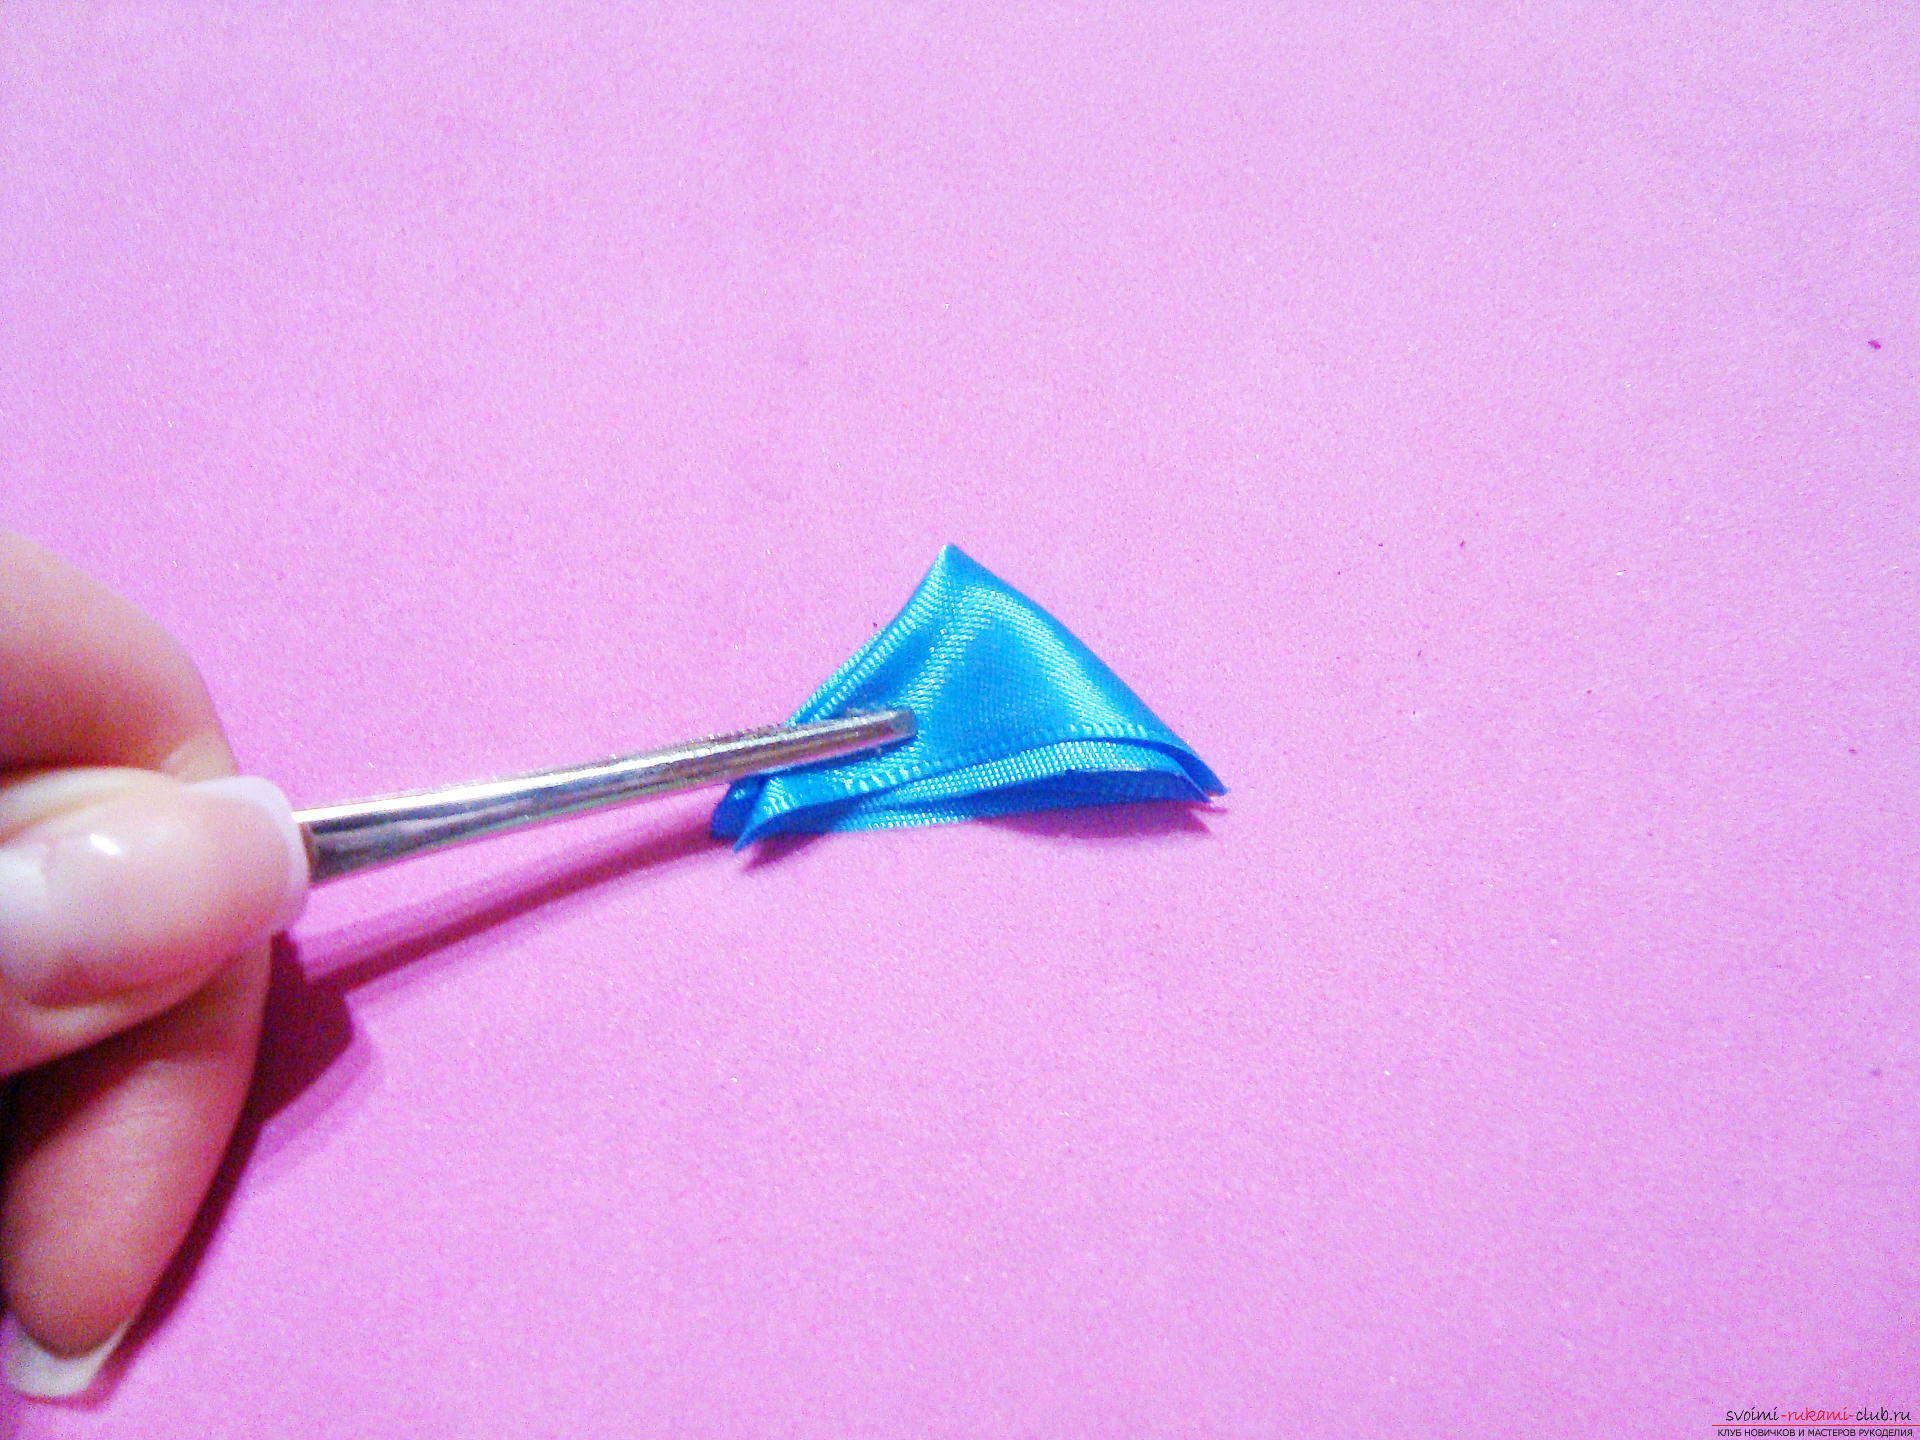 Фото инструкция по изготовлению заколки из лент голубого цвета в технике канзаши. Фото №9